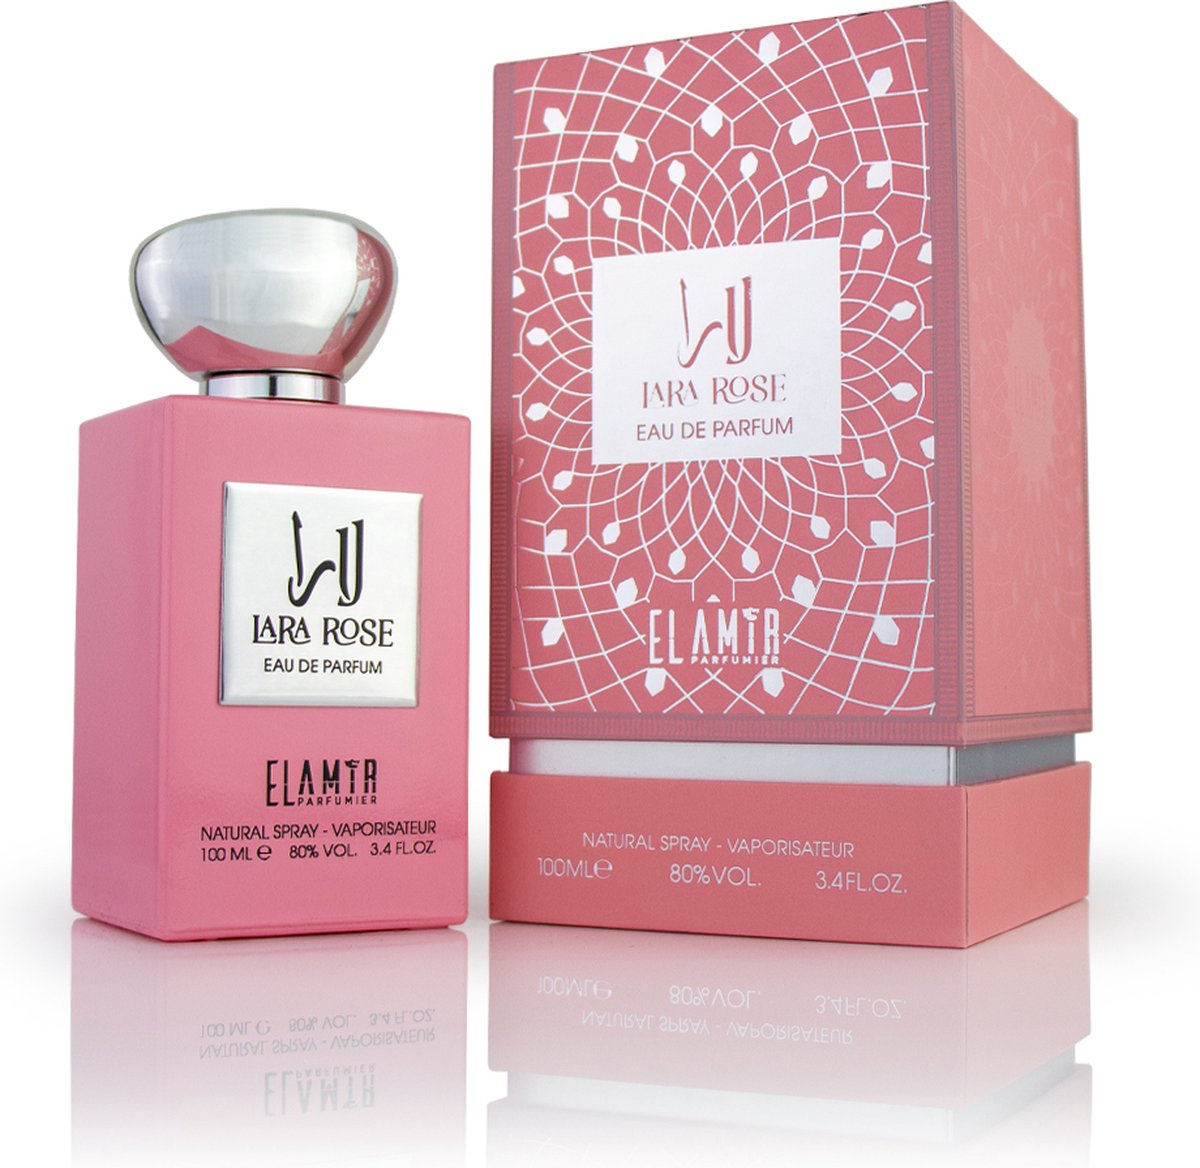 Lara Rose Eau de Parfum 100 ml - Oosterse parfum - EL AMIR